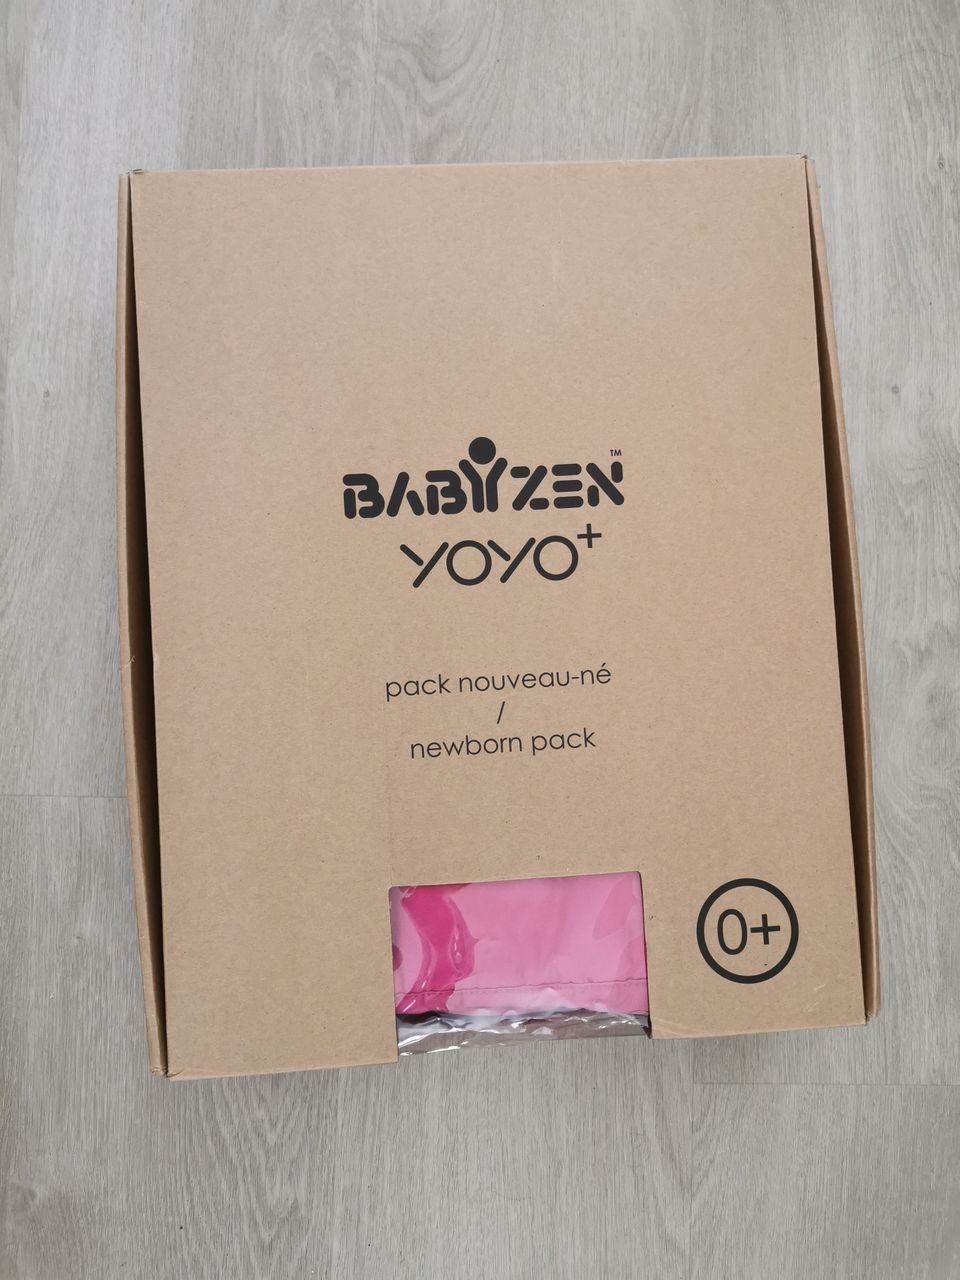 Babyzen yoyo+ newborn pack